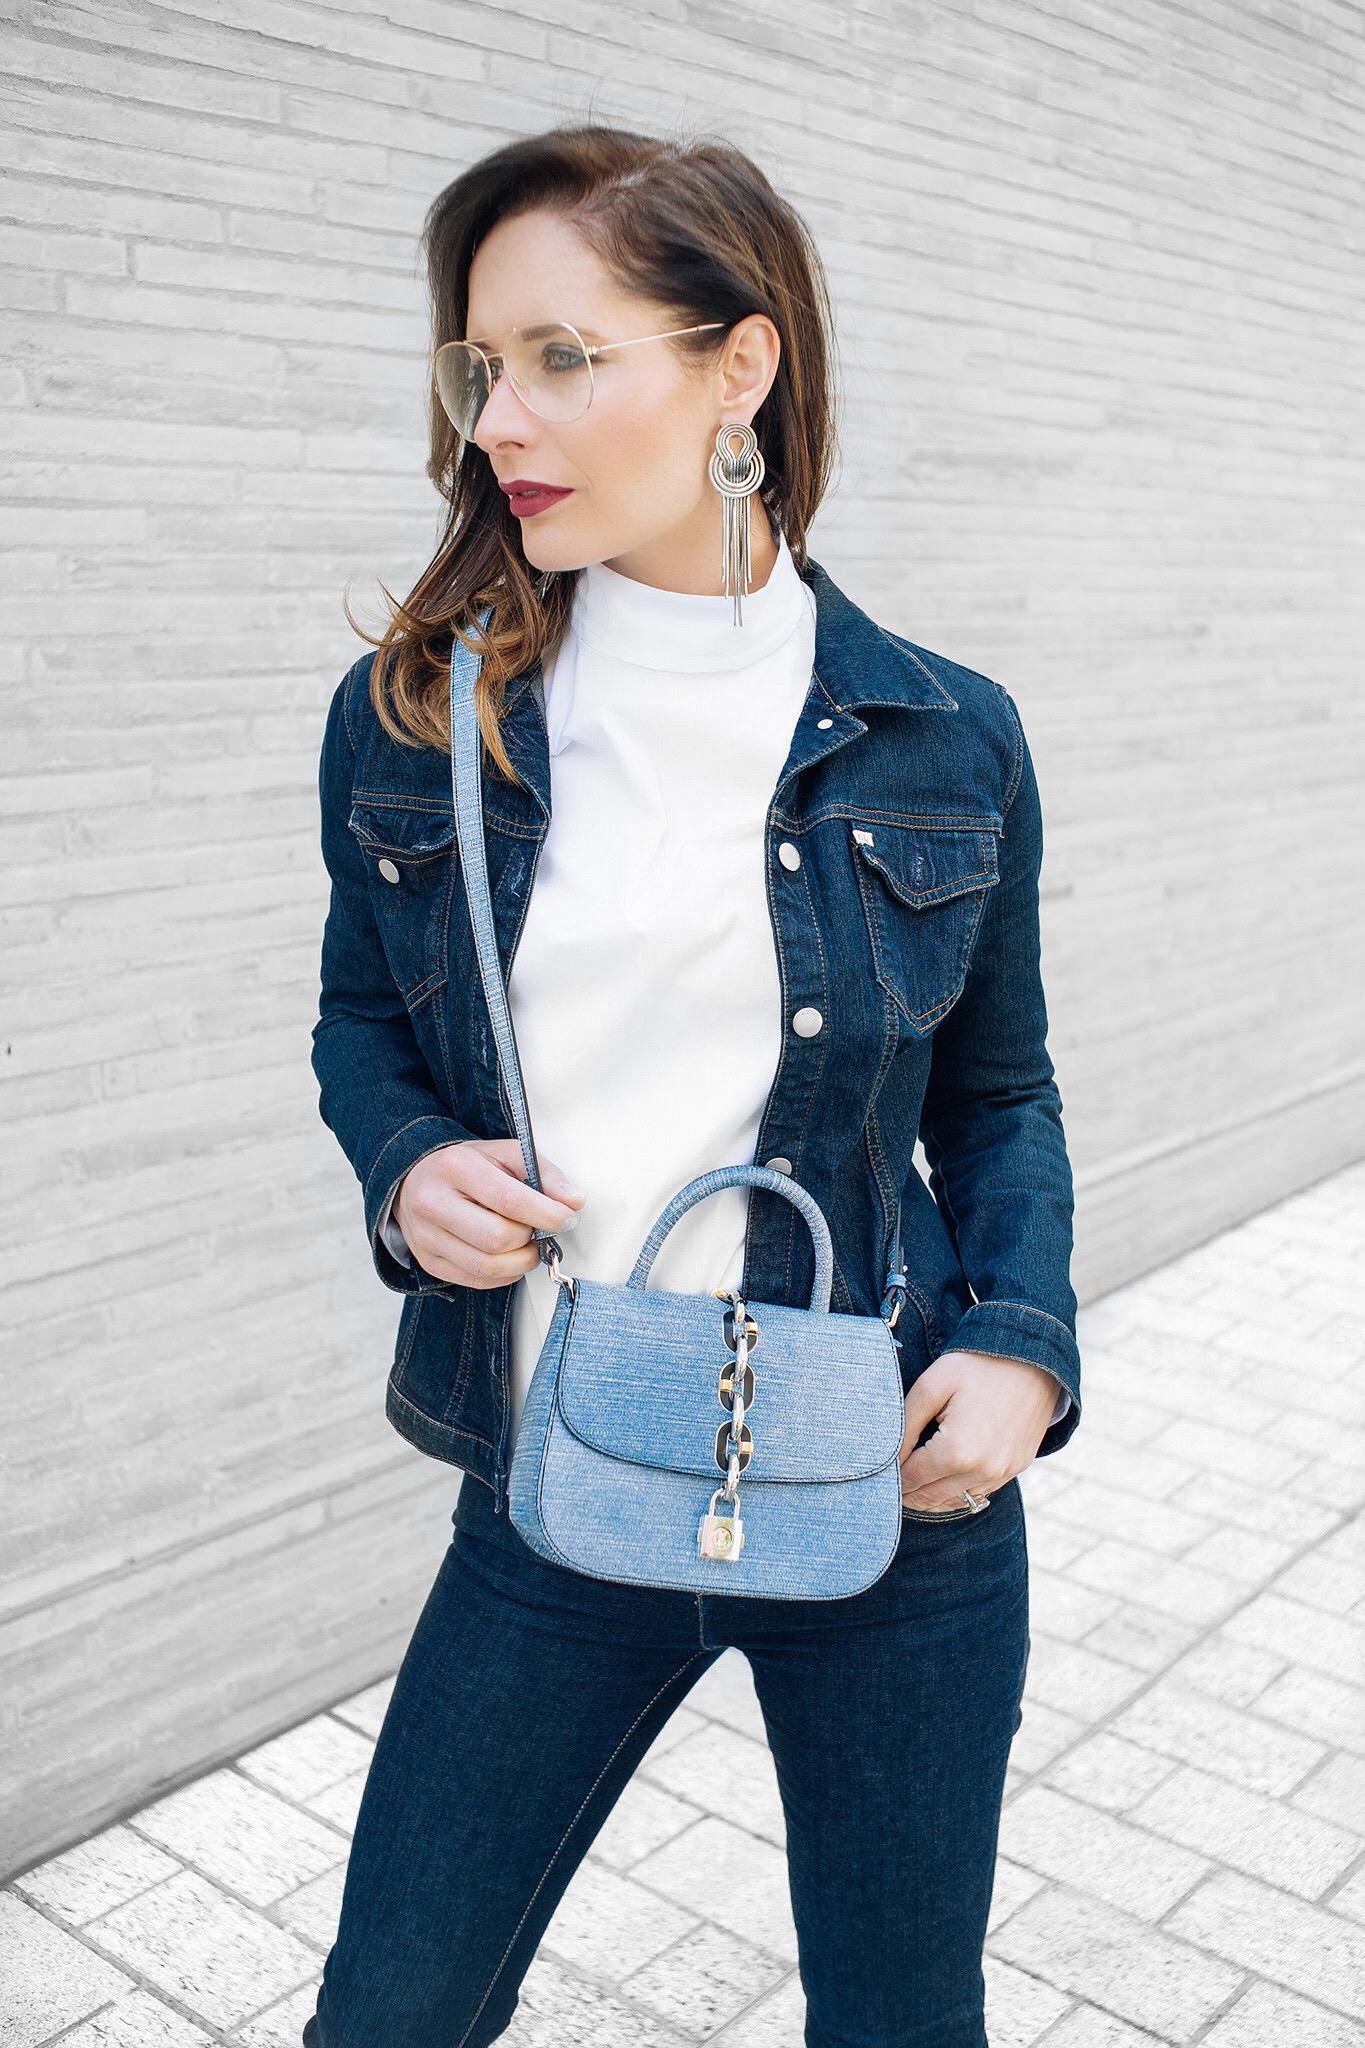 Chic Journal blogger wears double denim, Lara Bohinc earrings and LV bag